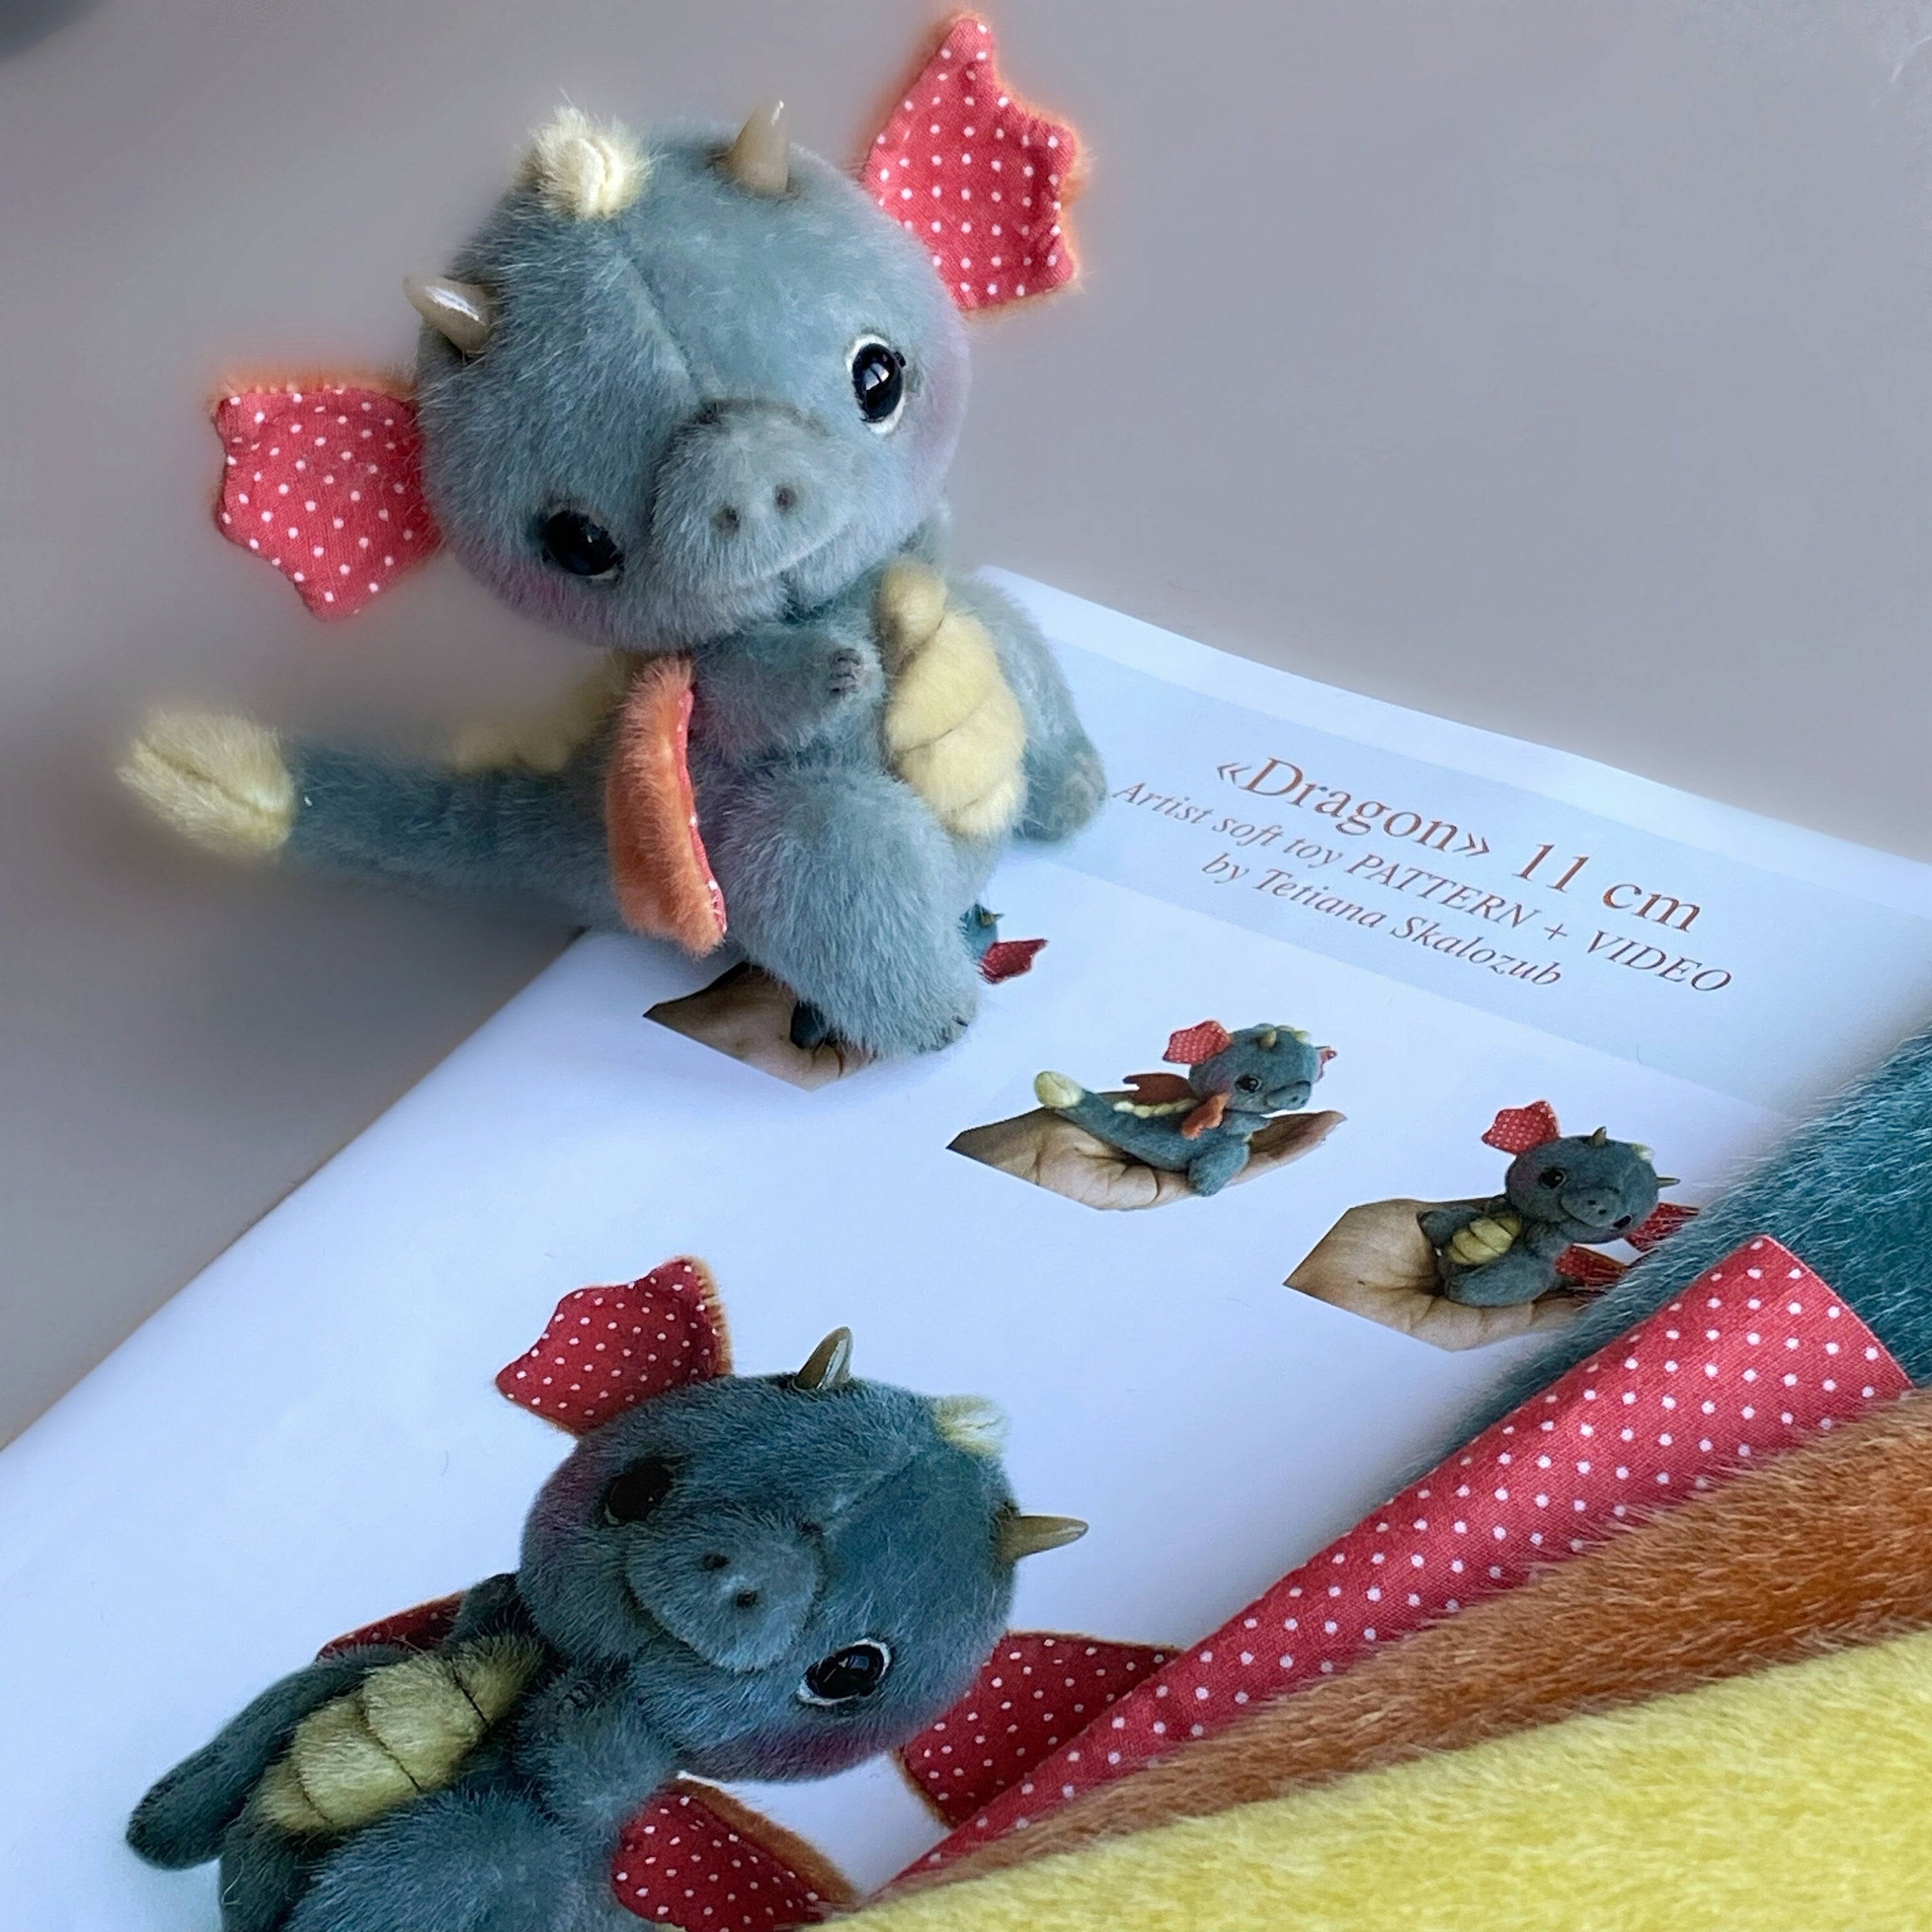 Dragon - Sewing KIT, artist pattern, stuffed toy tutorials, soft animal, soft toy diy craft kit for adults Bestseller TSminibears